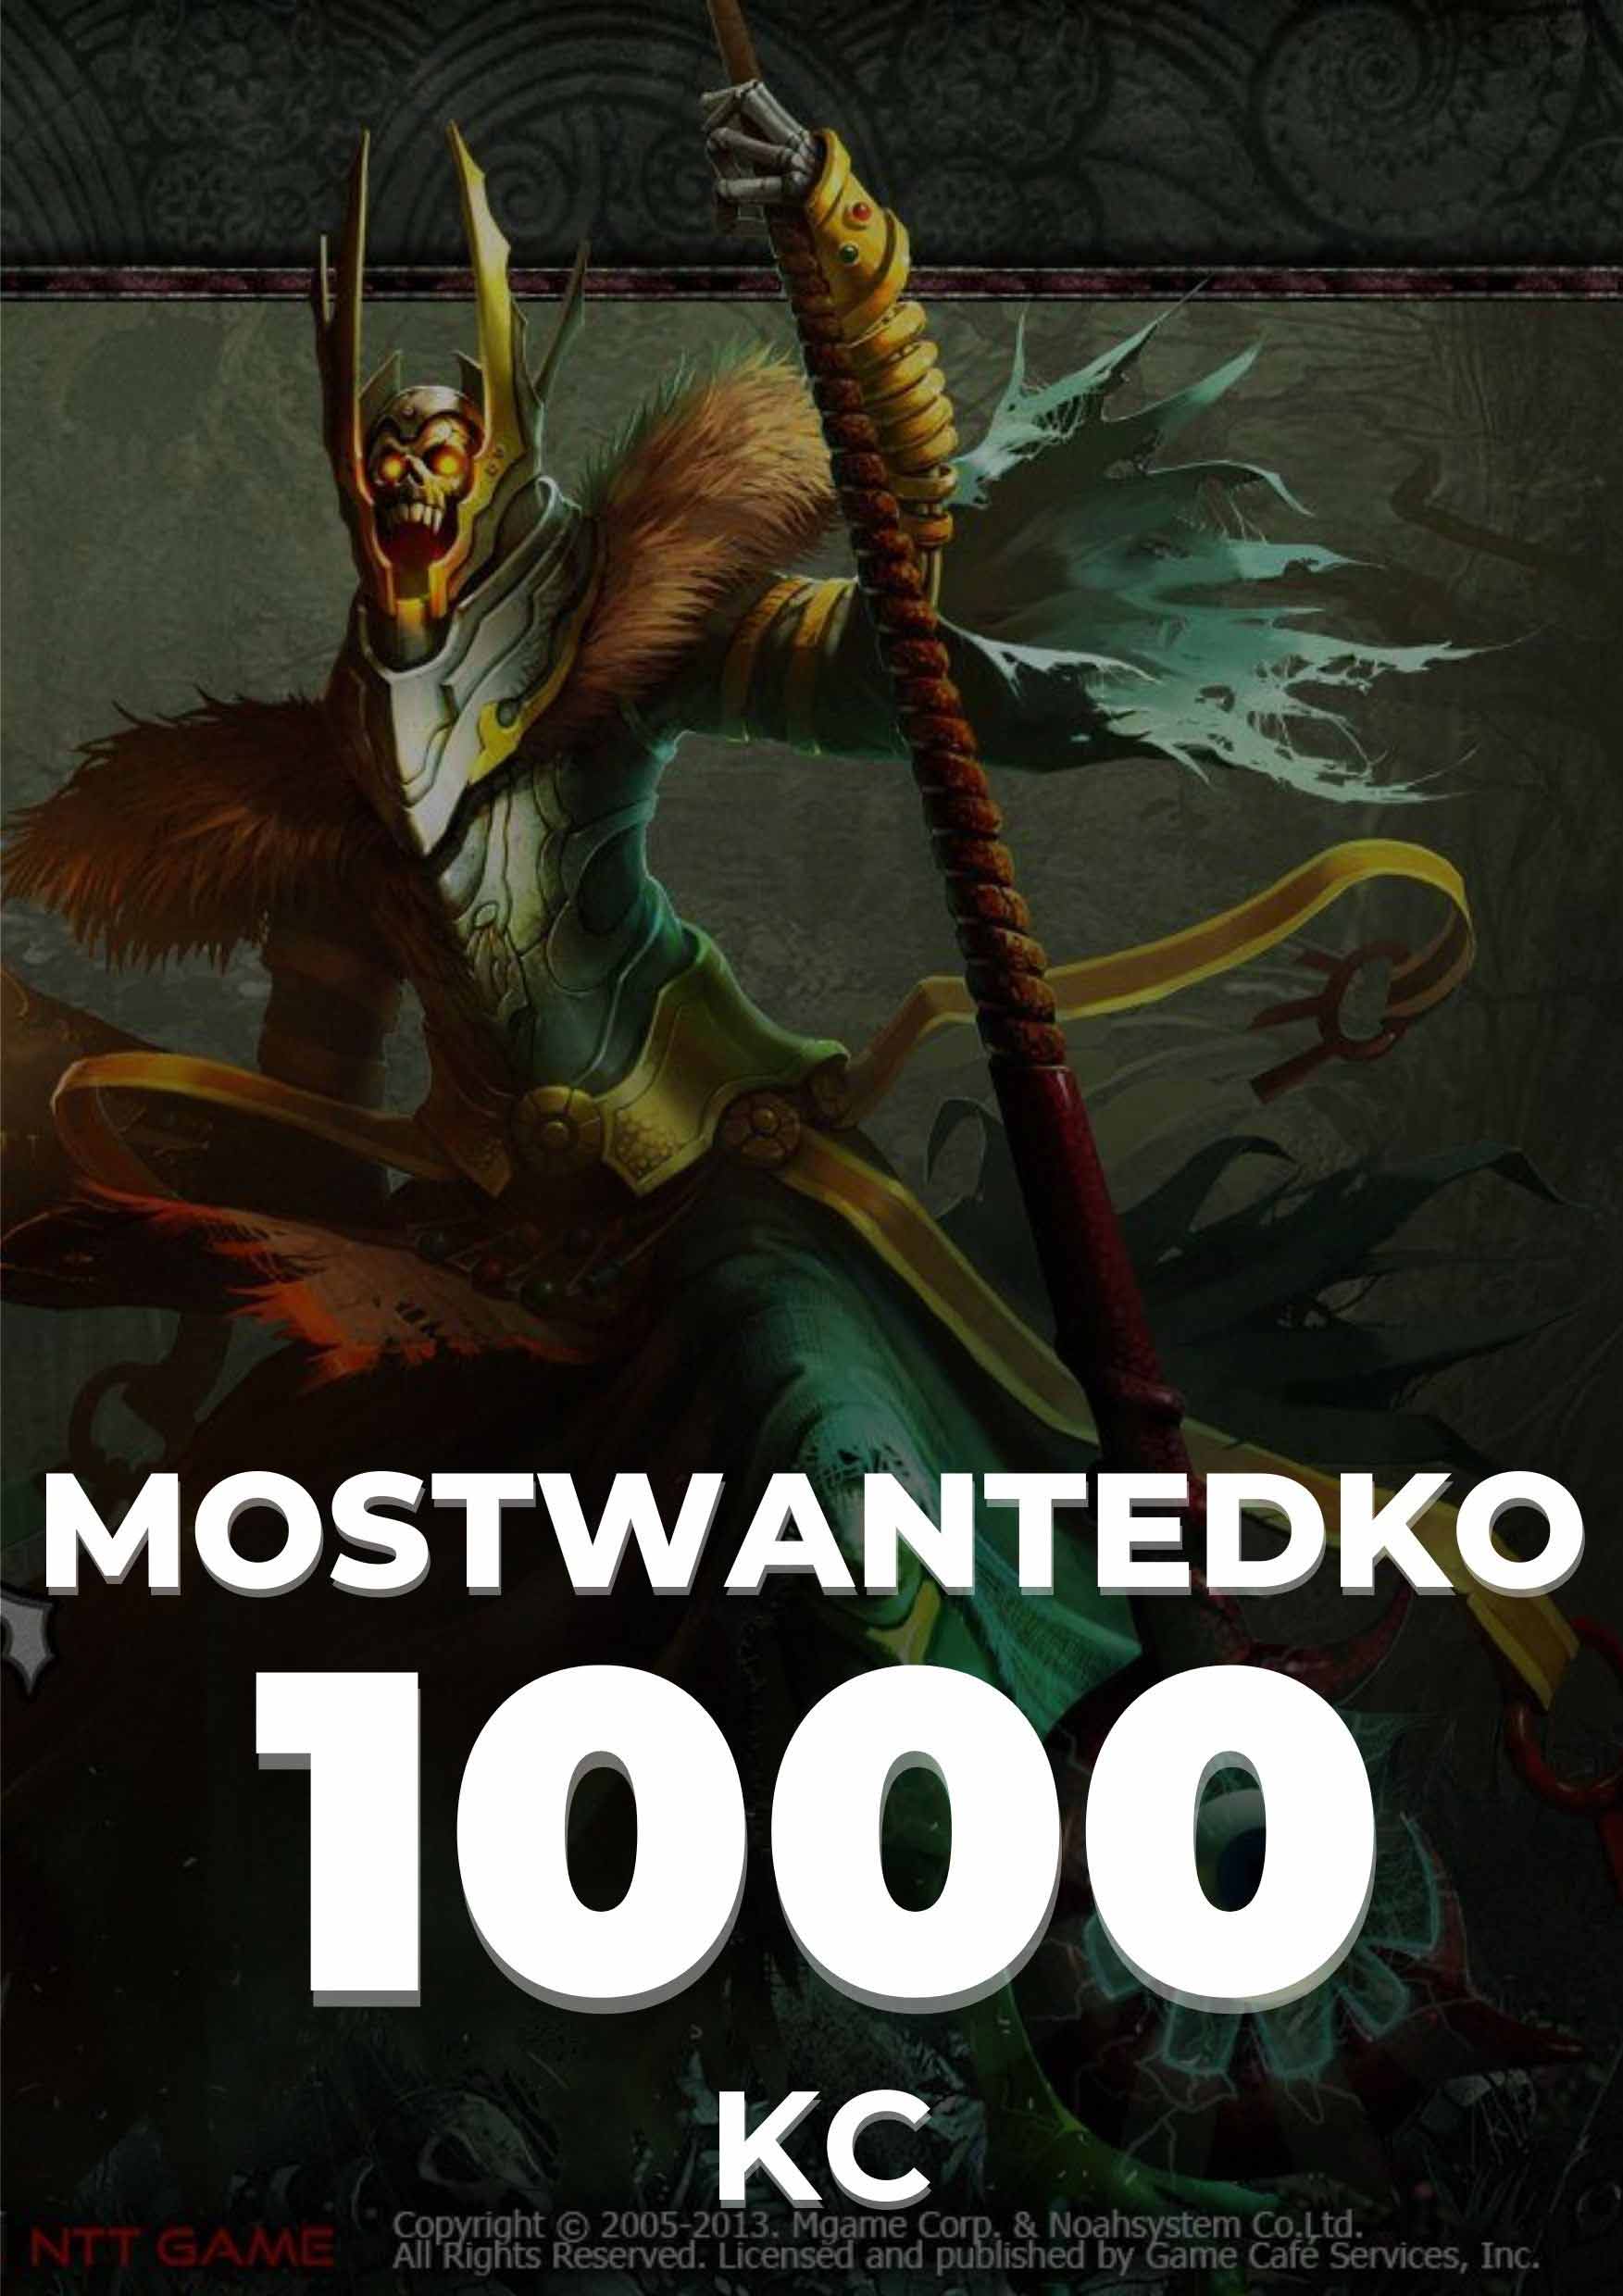 MOSTWANTEDKO 1000 KC